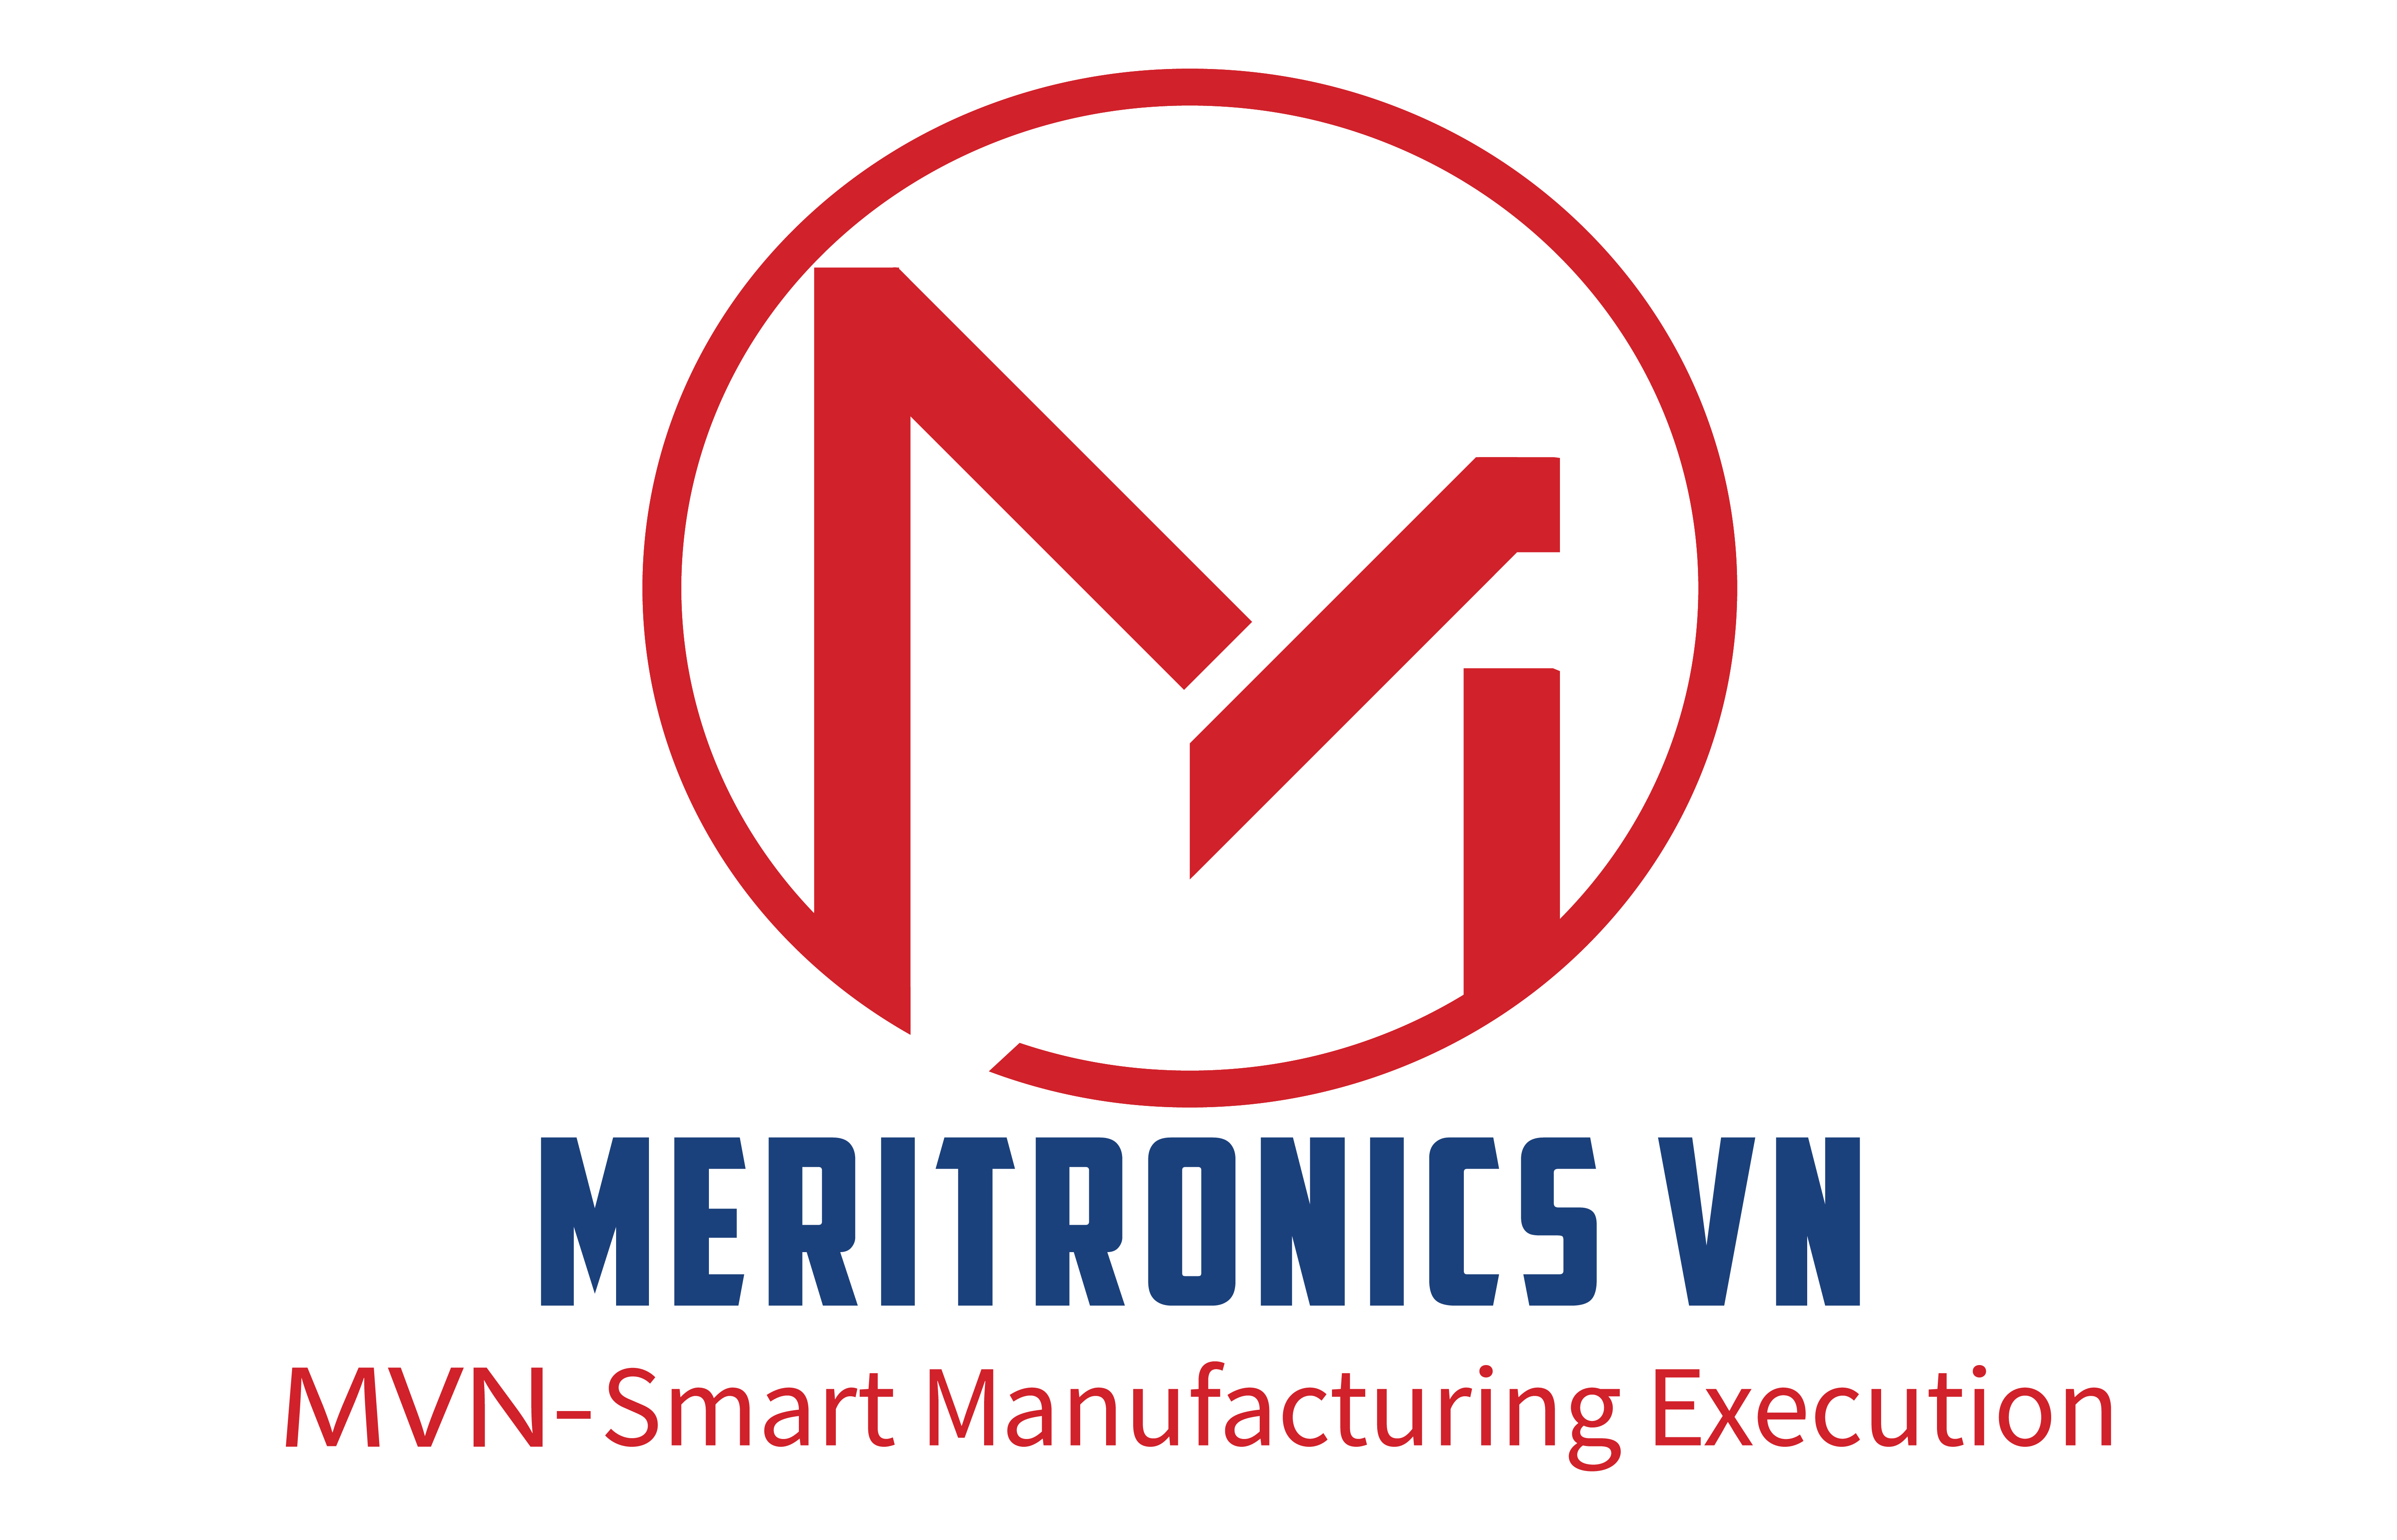 Meritronics Vietnam